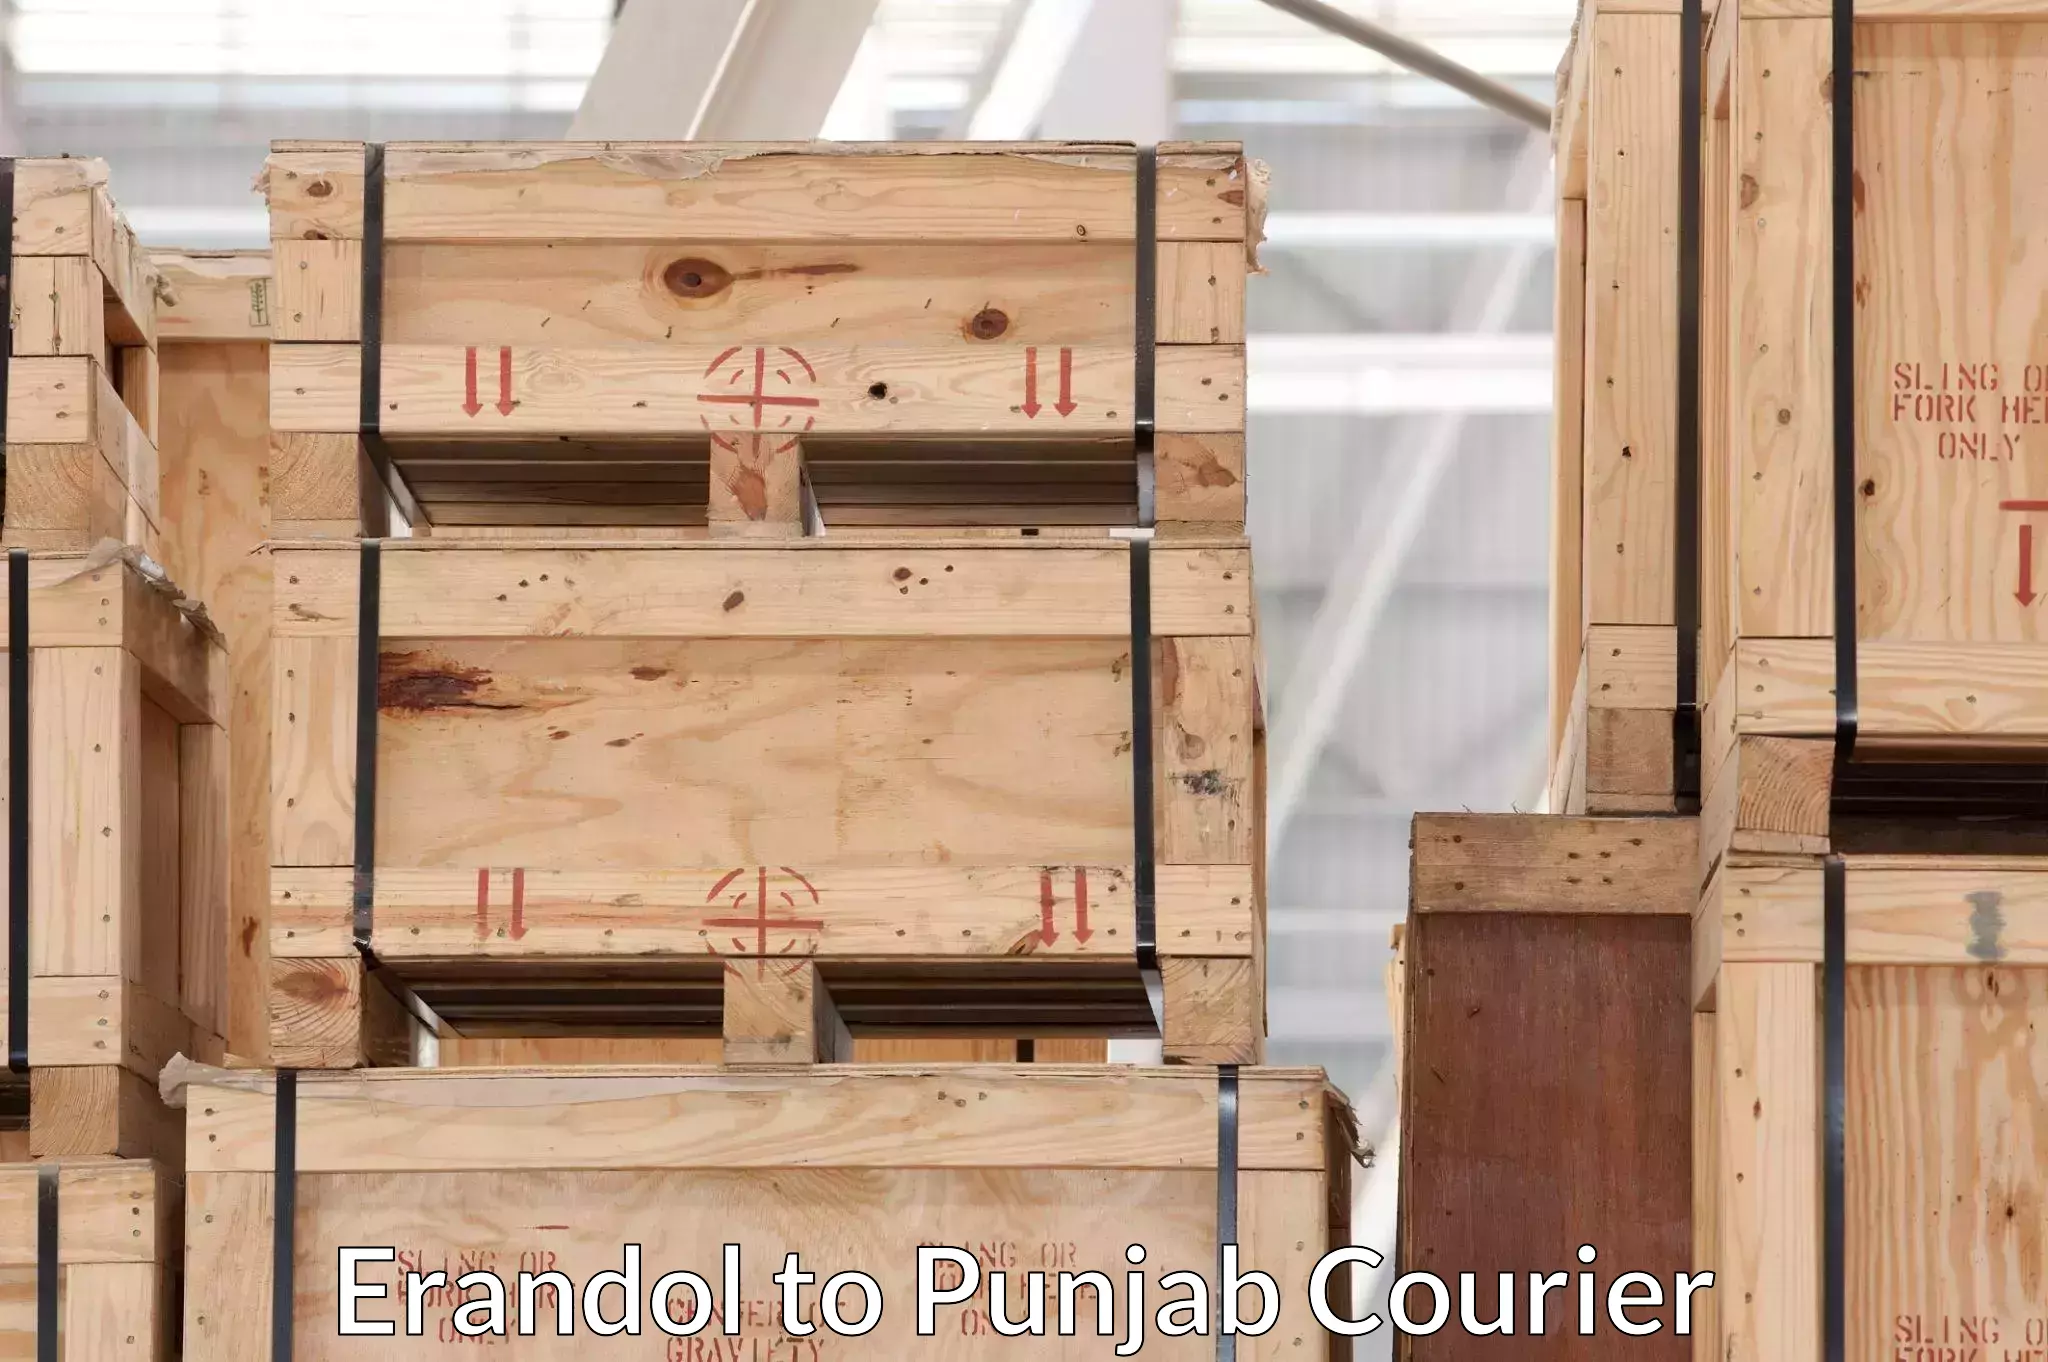 Household goods transport service Erandol to Punjab